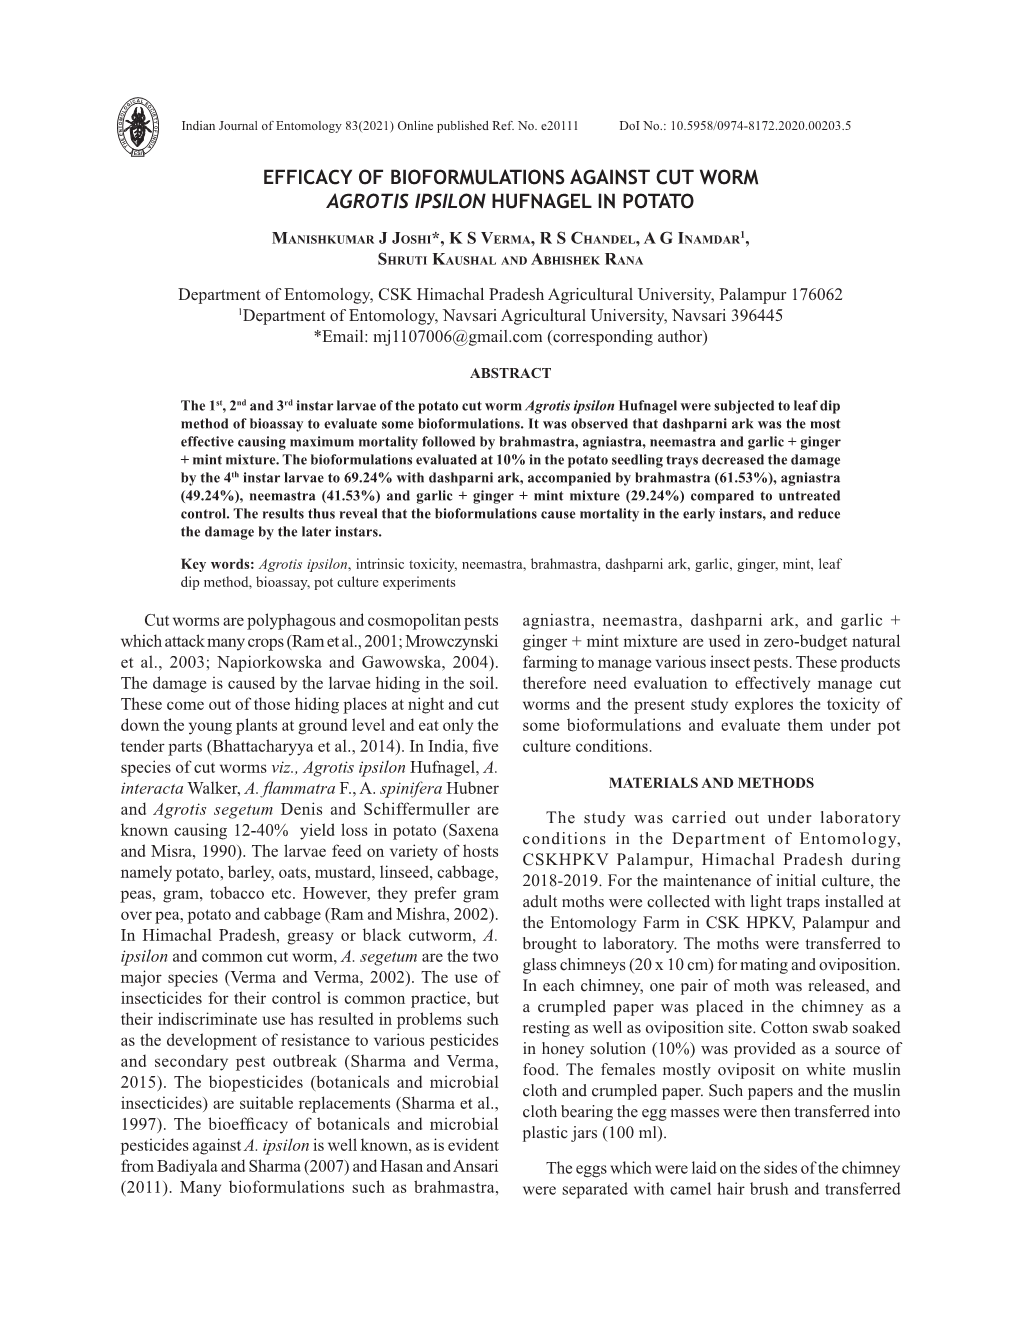 Efficacy of Bioformulations Against Cut Worm Agrotis Ipsilon Hufnagel in Potato